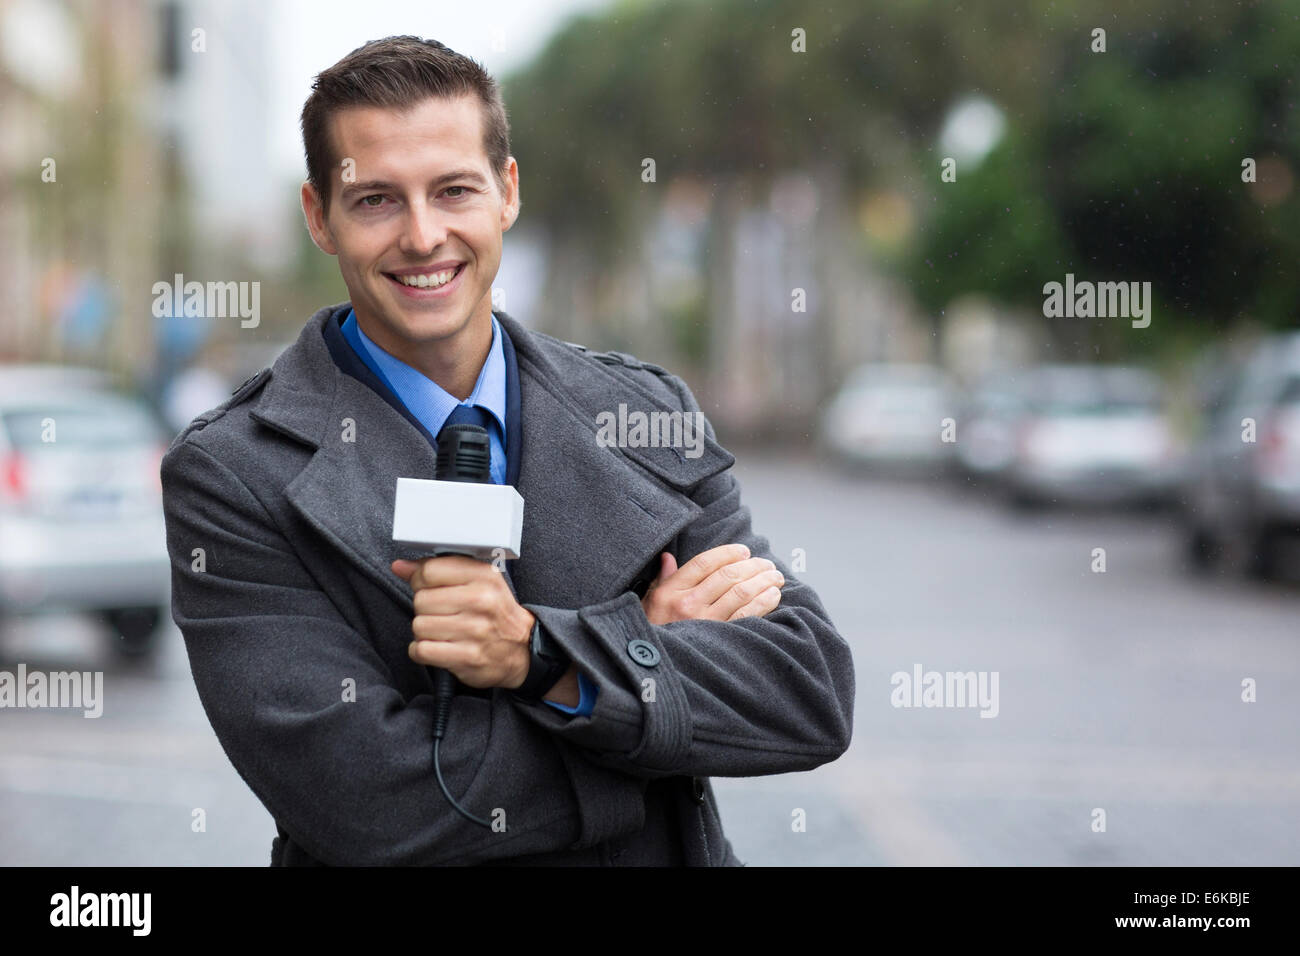 happy professional news reporter portrait in the city in the rain Stock Photo